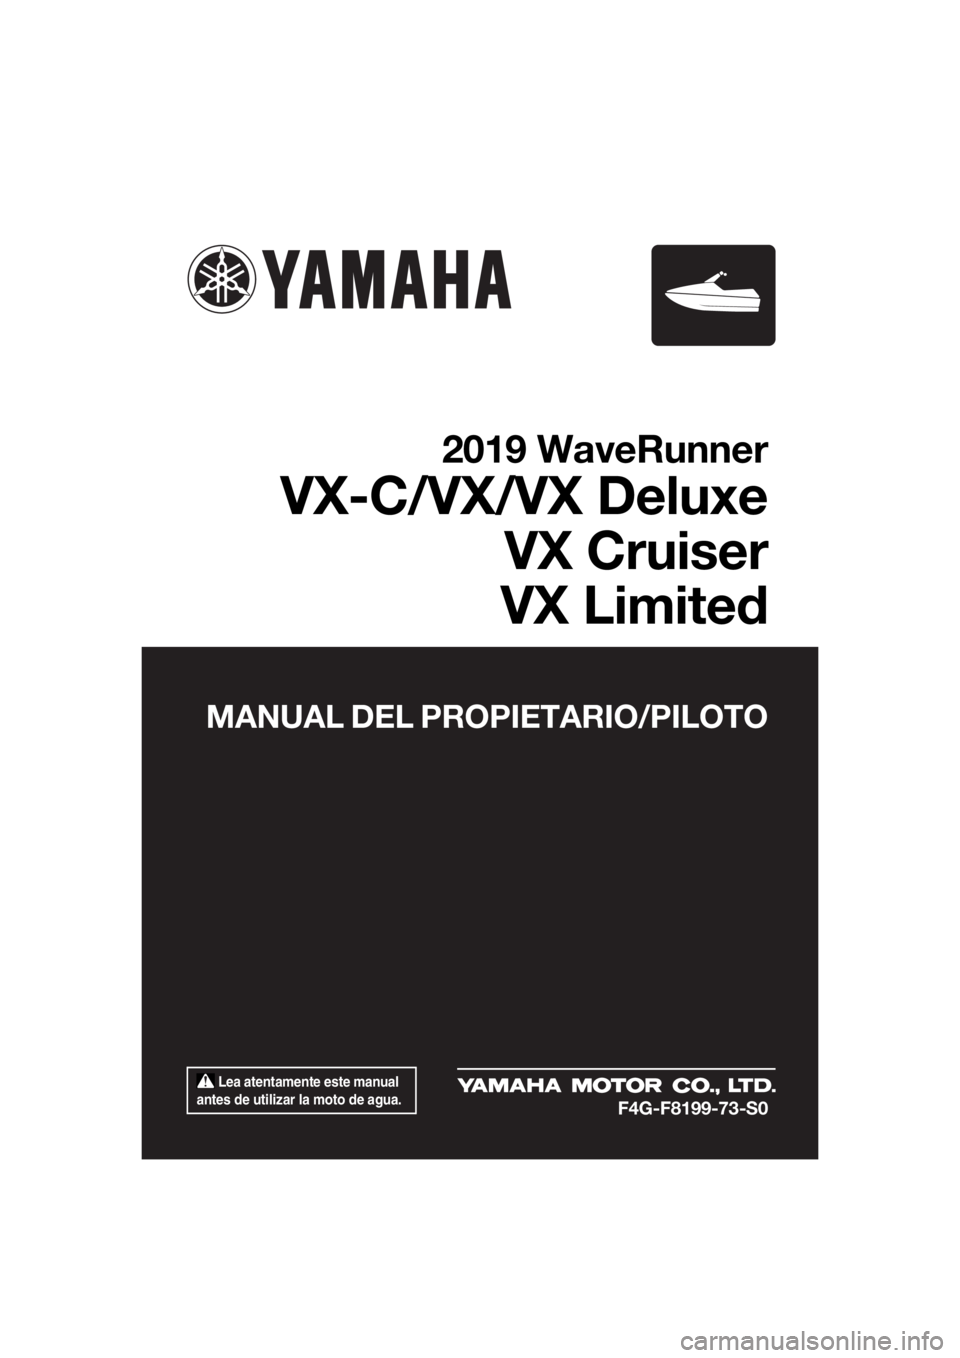 YAMAHA VX LIMITED 2019  Manuale de Empleo (in Spanish) 